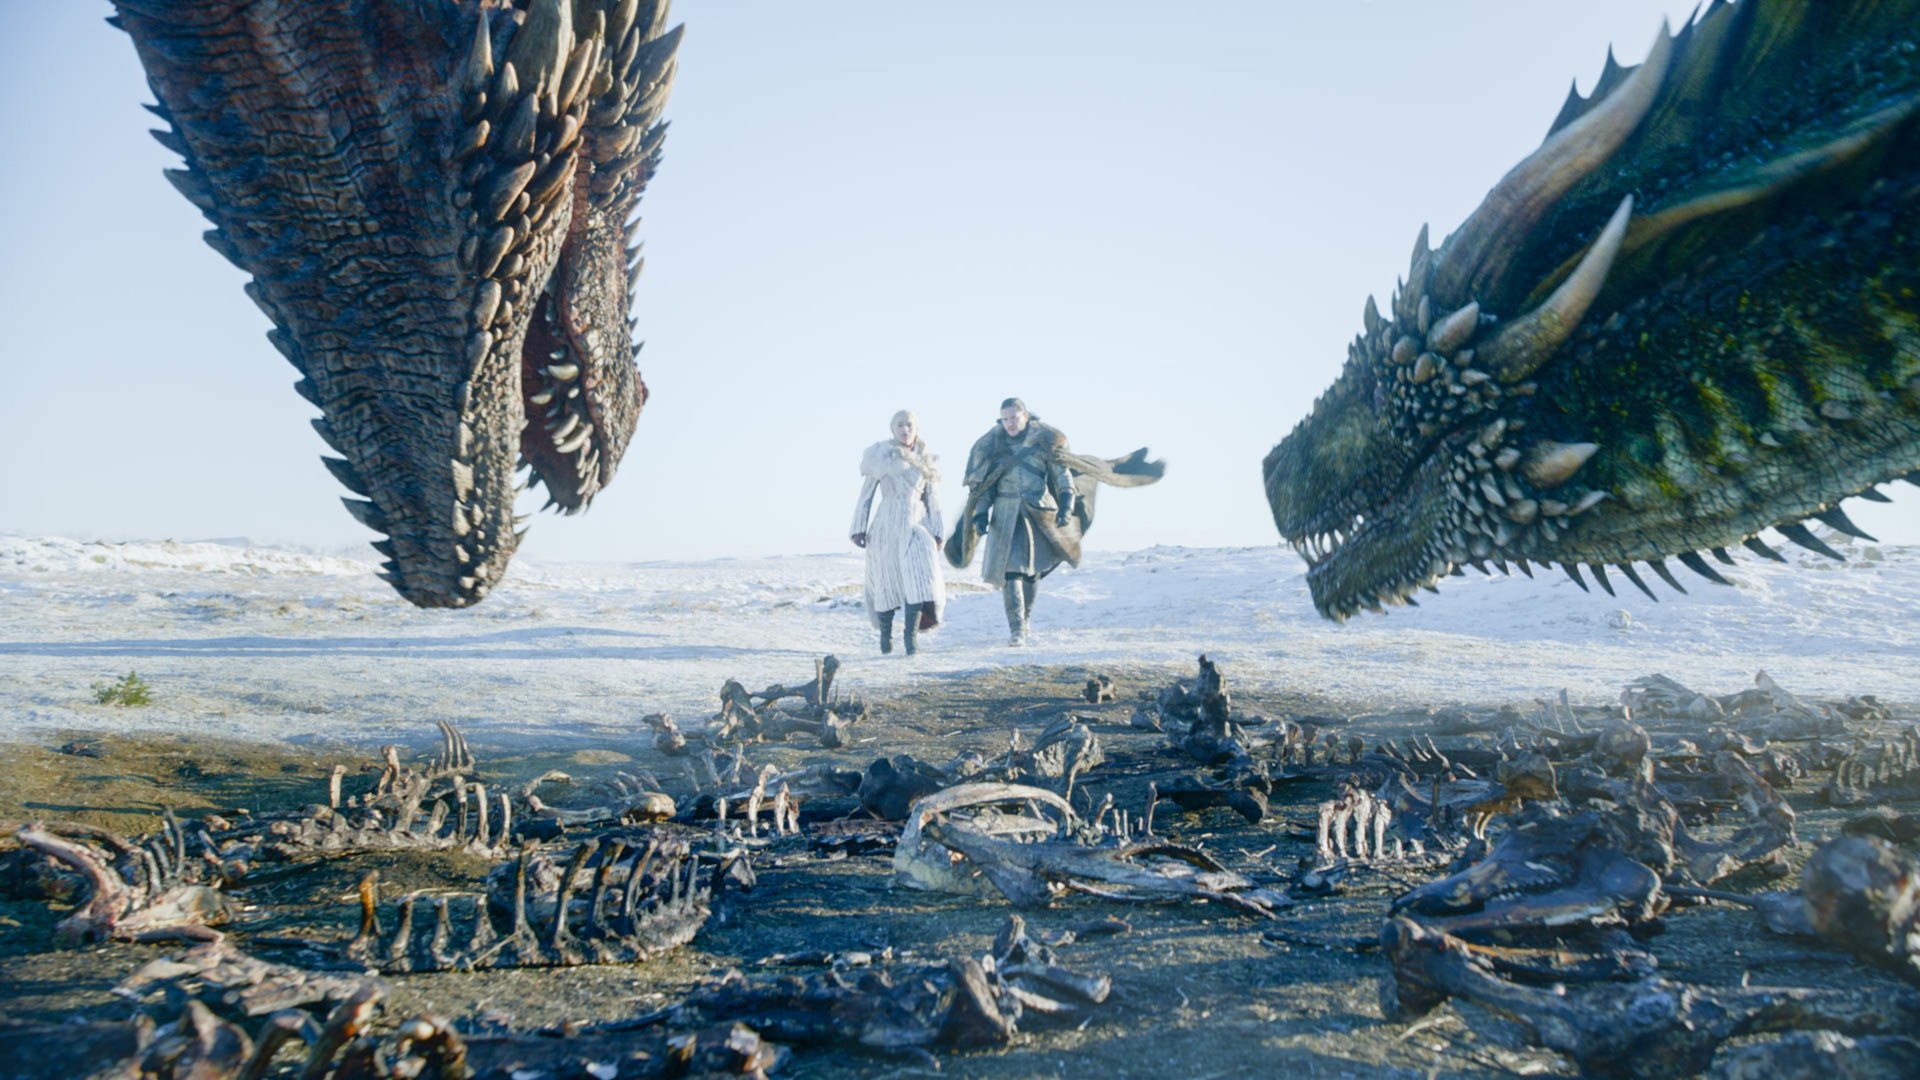 Maisie Williams Reacts to Jon Snow-Centered Games of Thrones Sequel Series